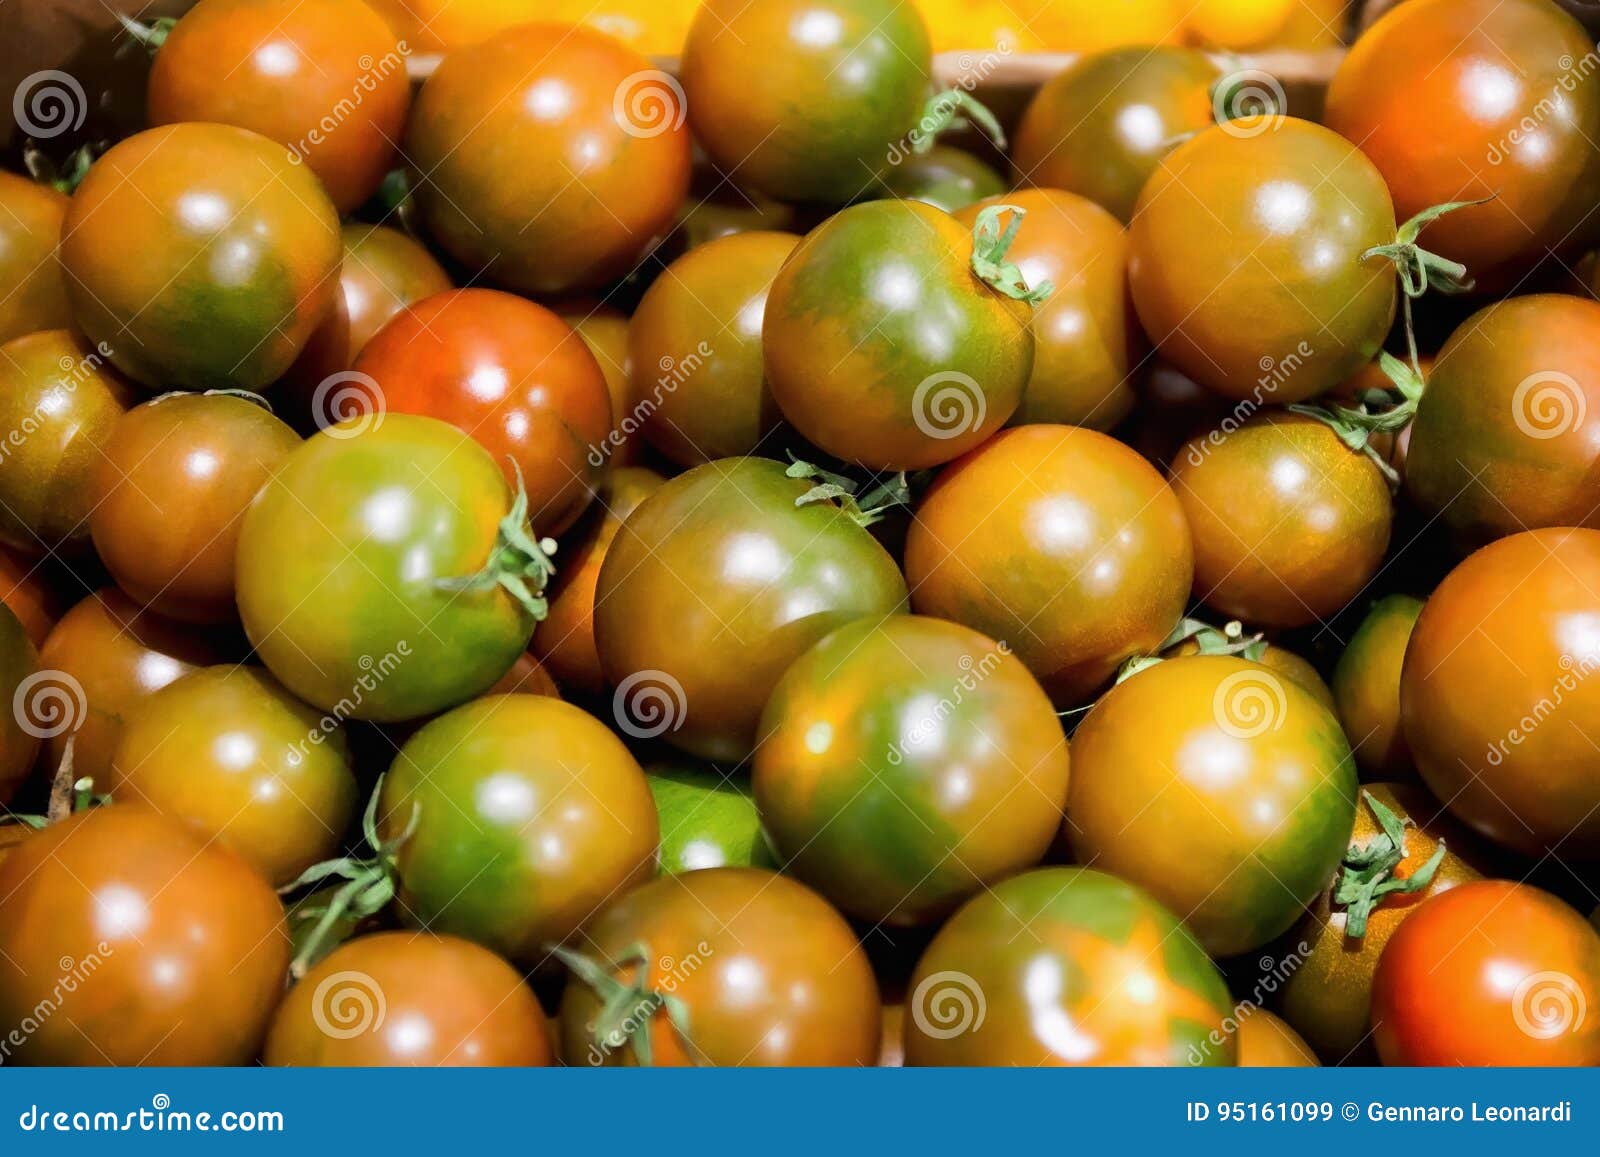 Tomates cerises rondes